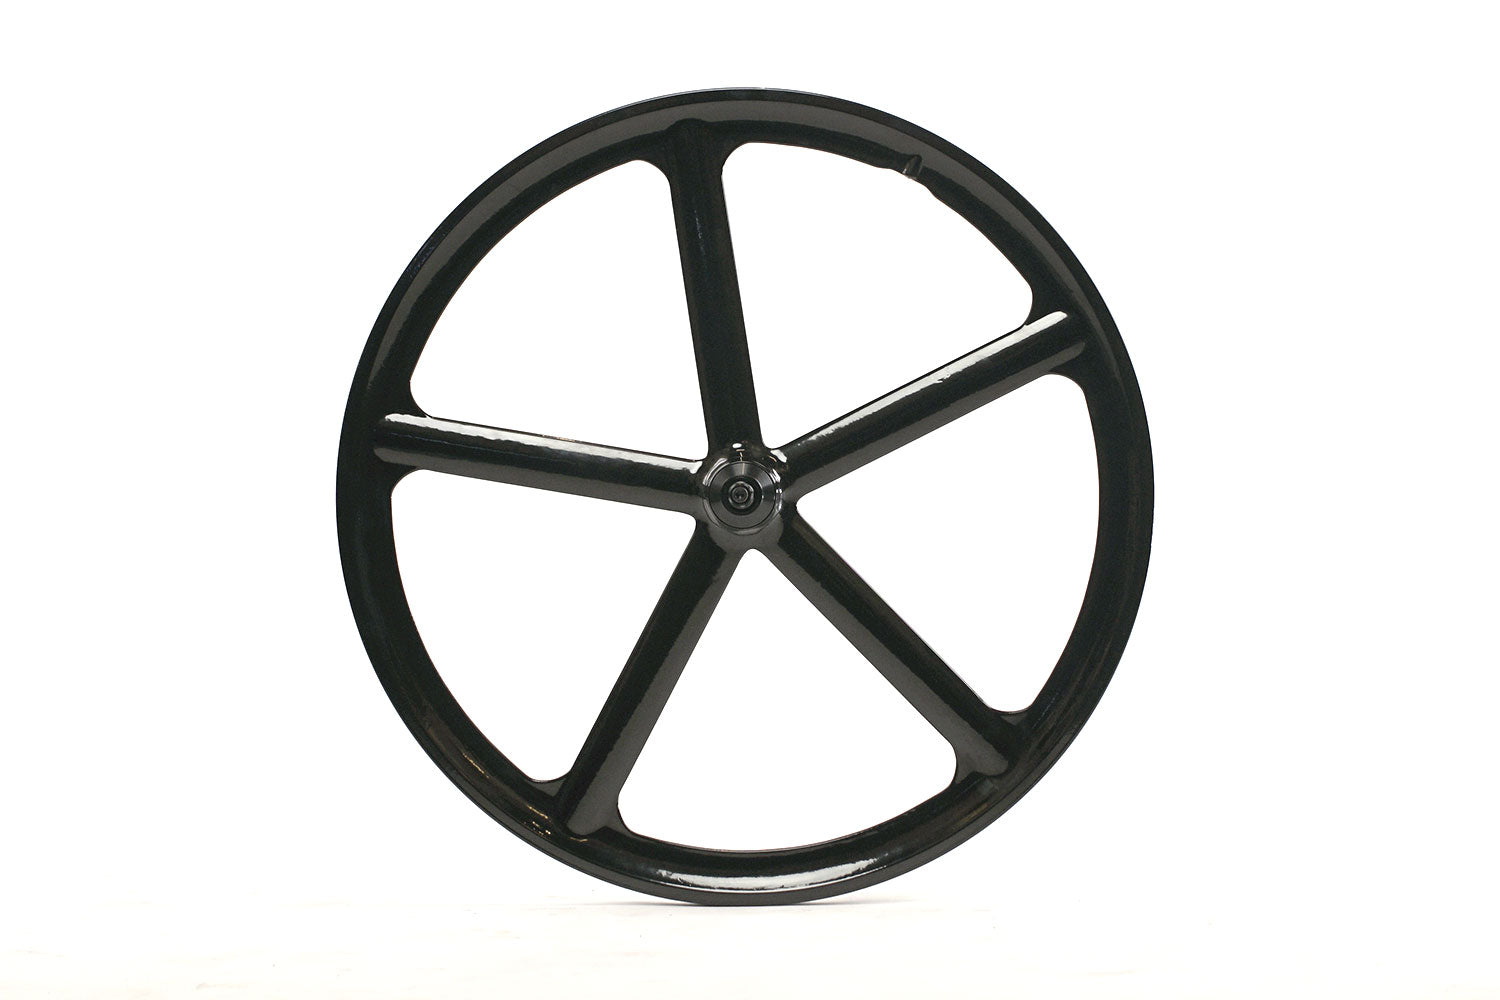 5 spoke bicycle wheels